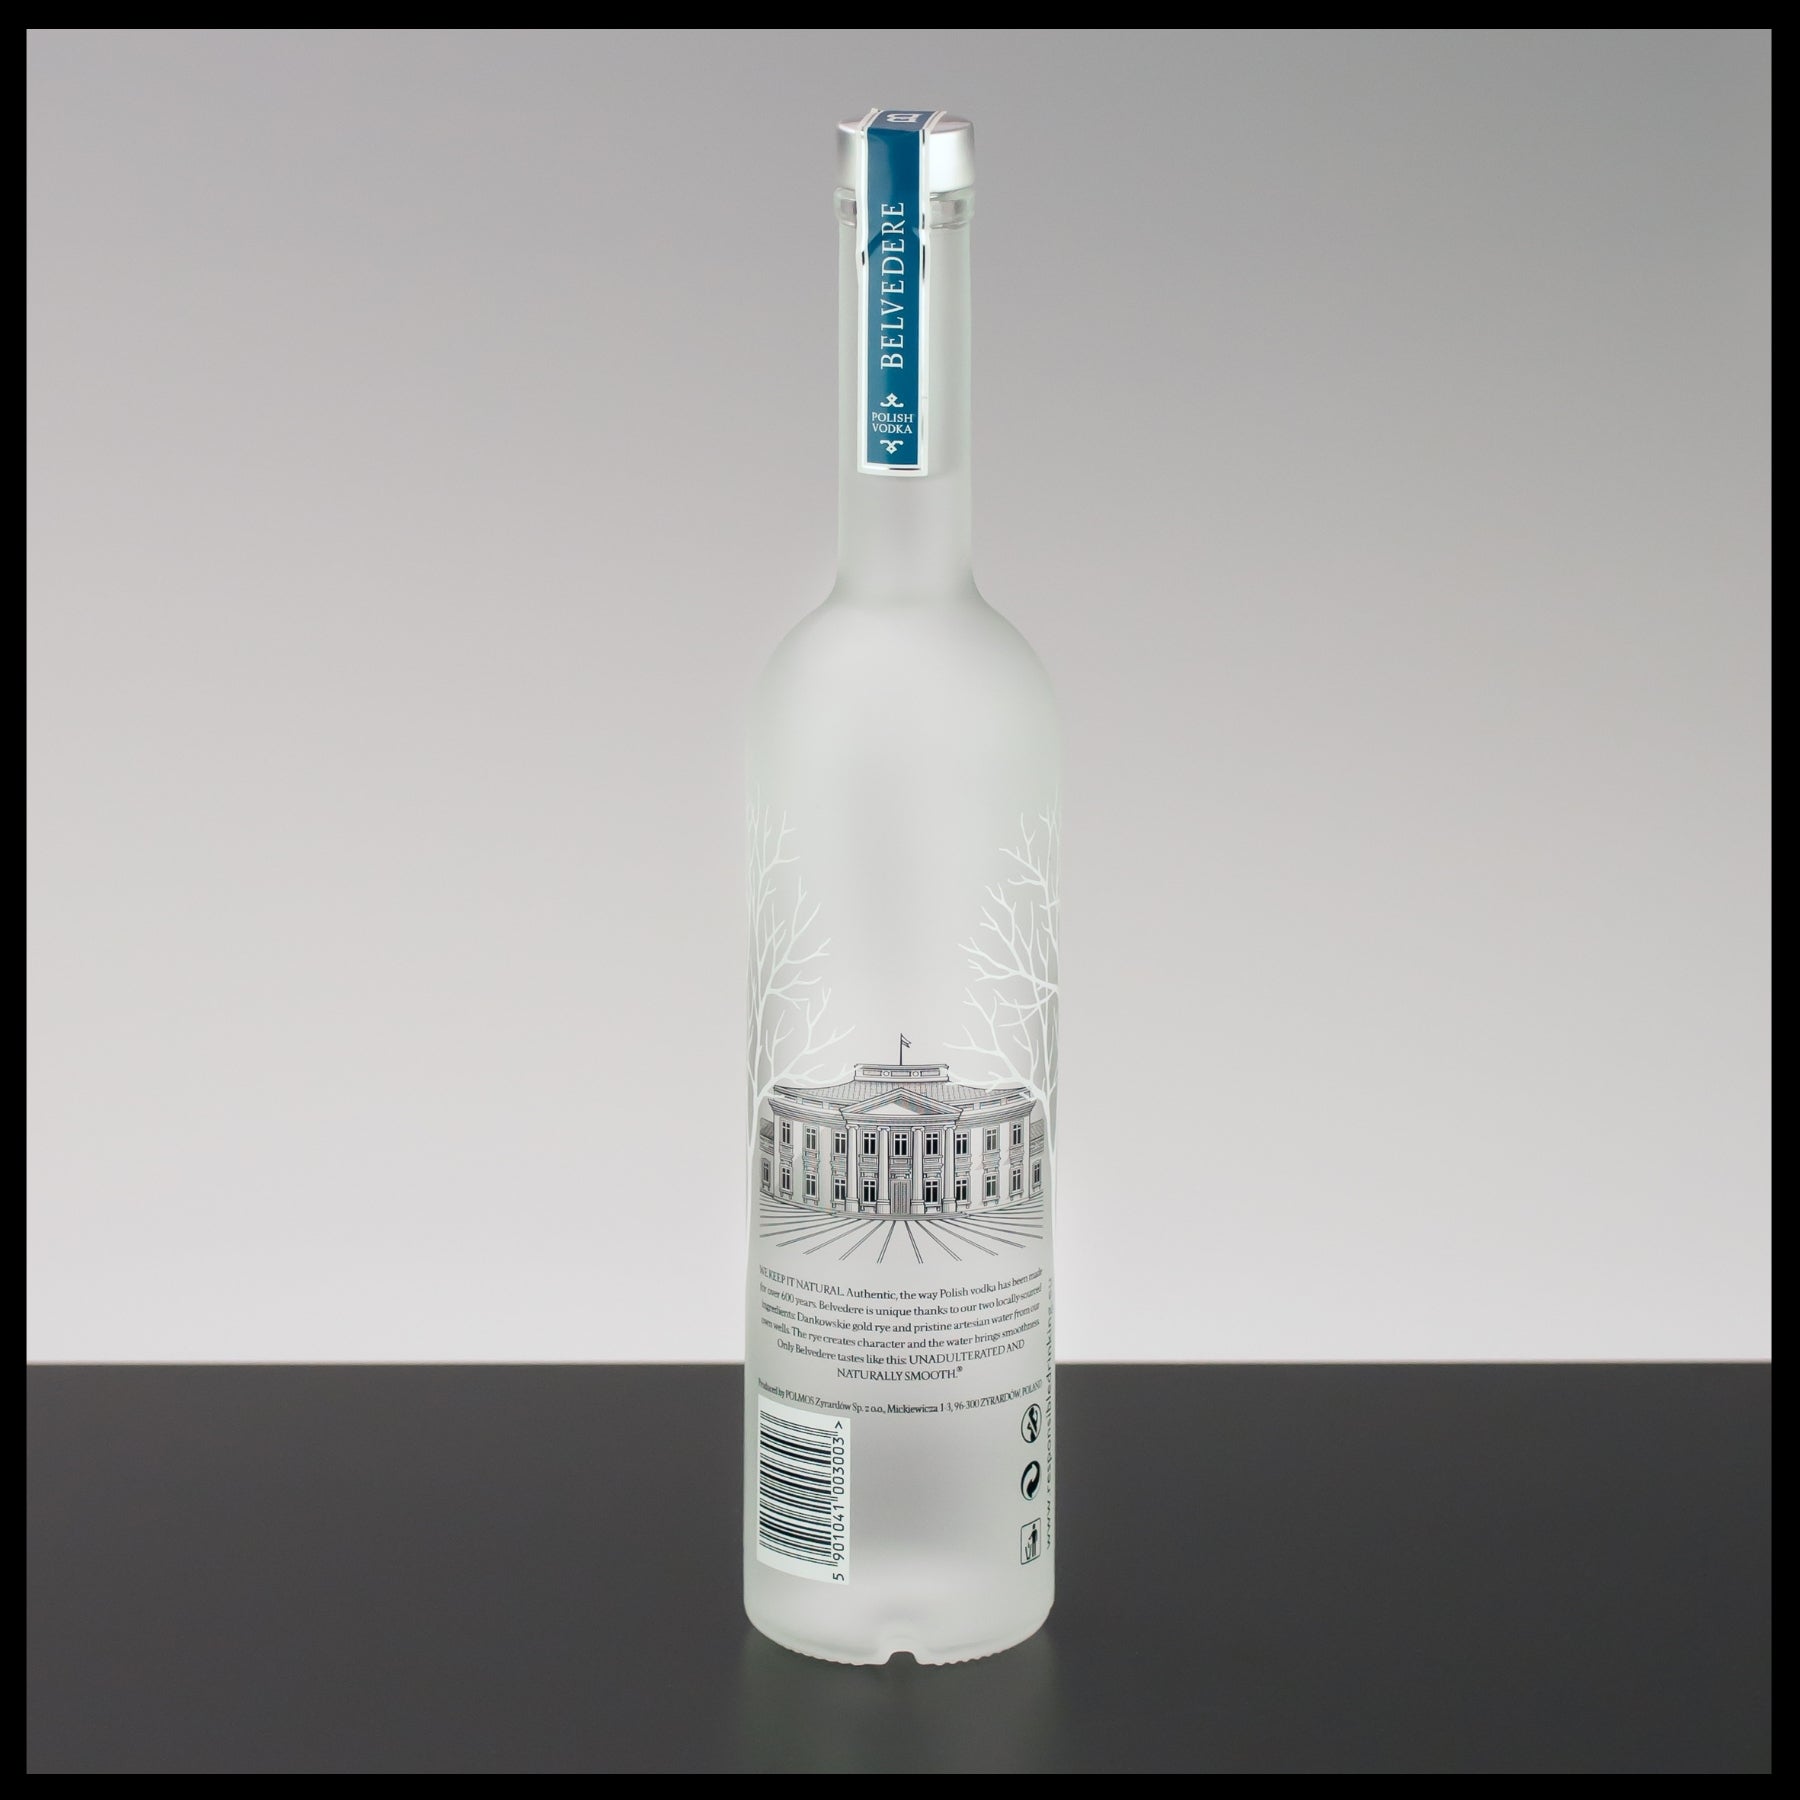 Belvedere - Vodka - 0,7 L